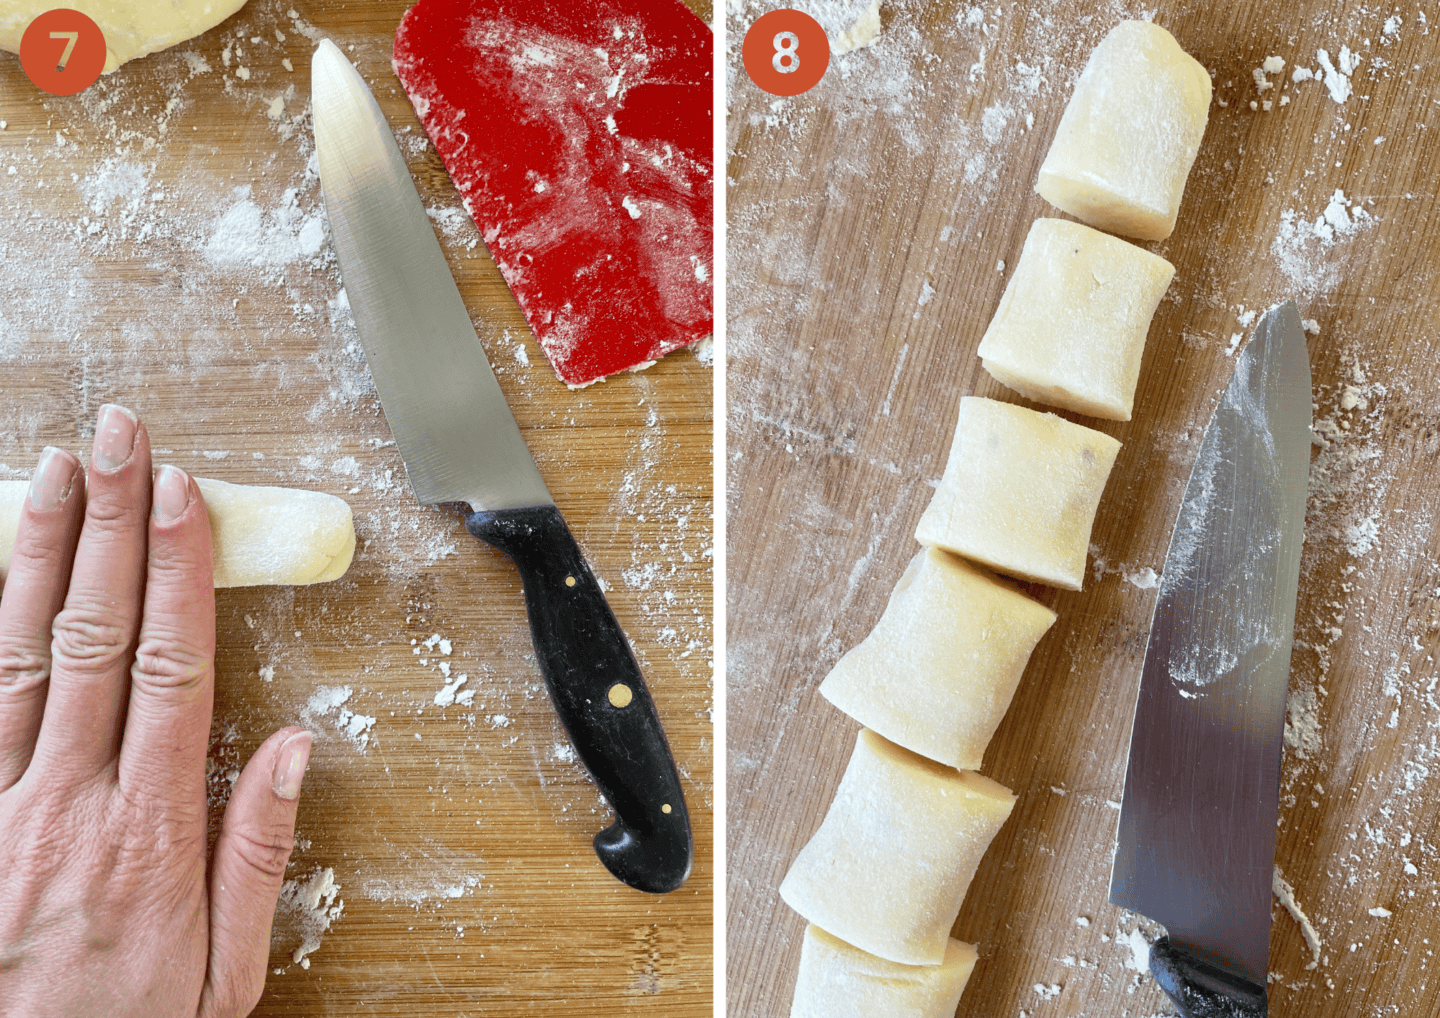 Roll the gnocchi dough then cut into pieces.